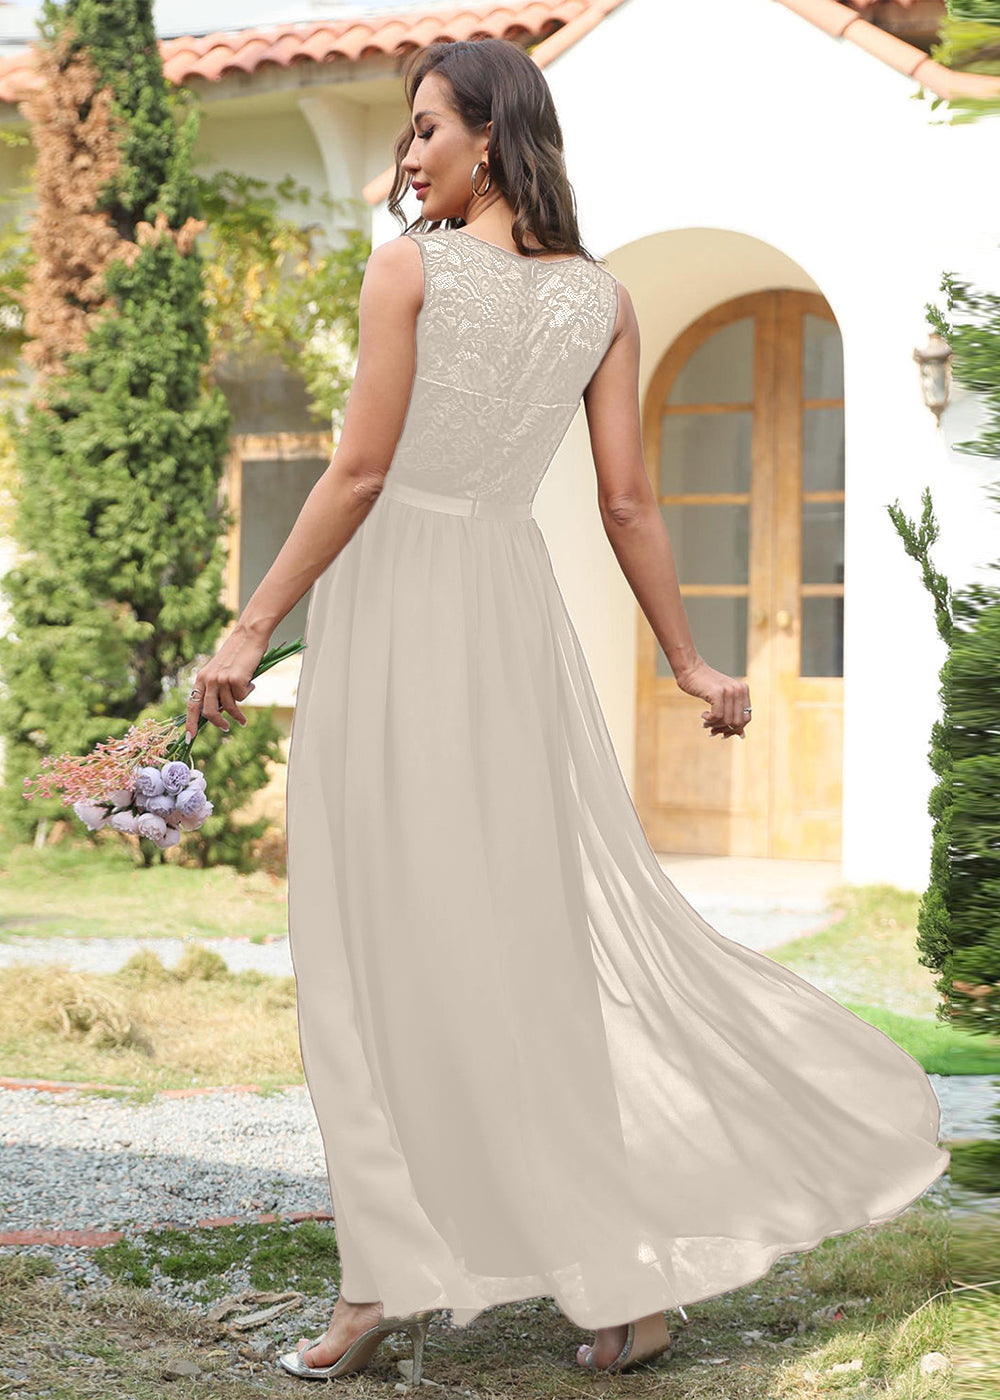 Long V-neck Sleeveless Bridesmaid Dress with Lace